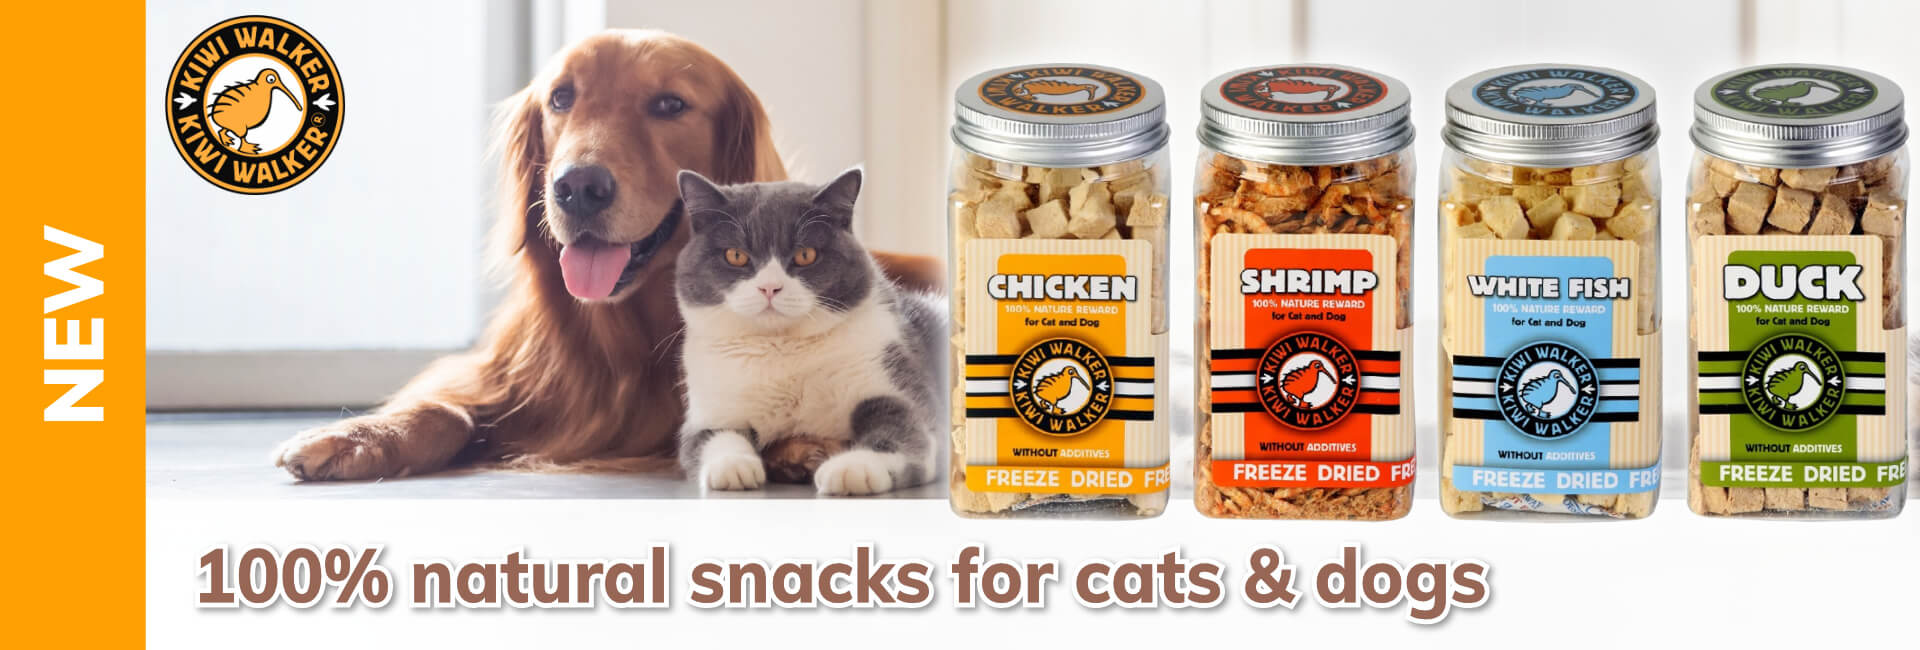 Kiwi Walker Snacks for cats & dogs